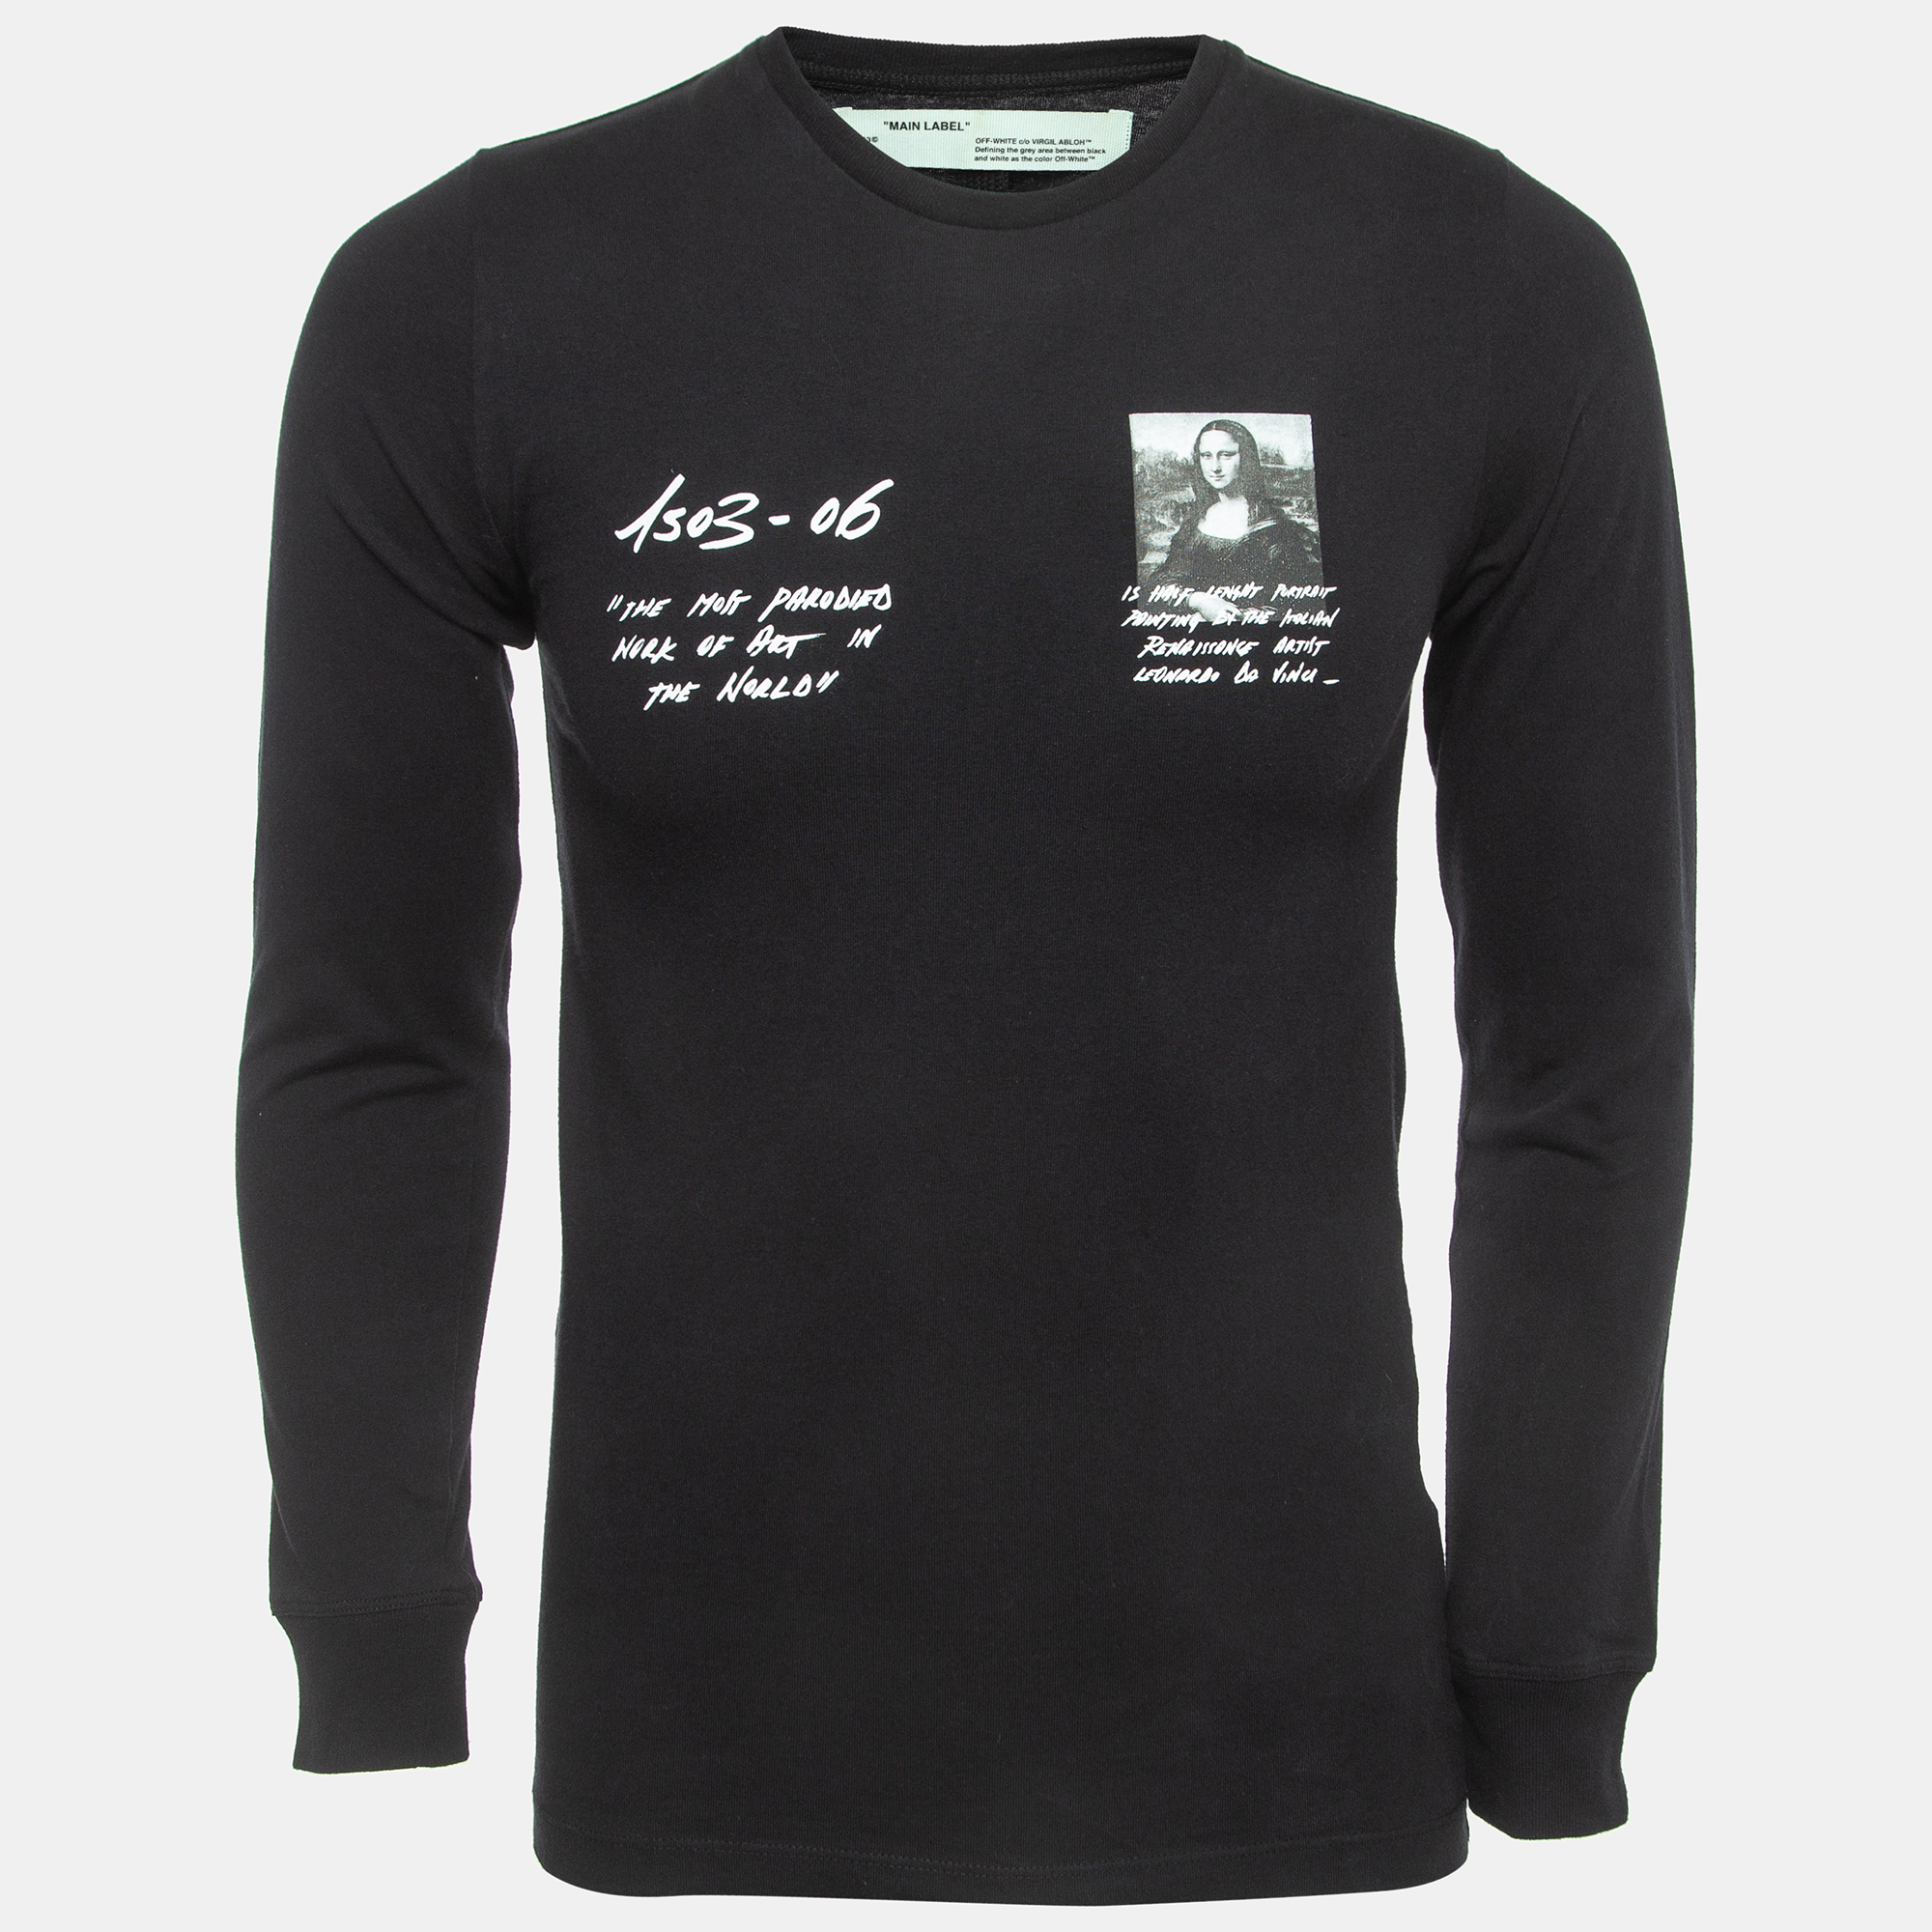 Off-White Black Monalisa Print Cotton Long Sleeve T-Shirt XS